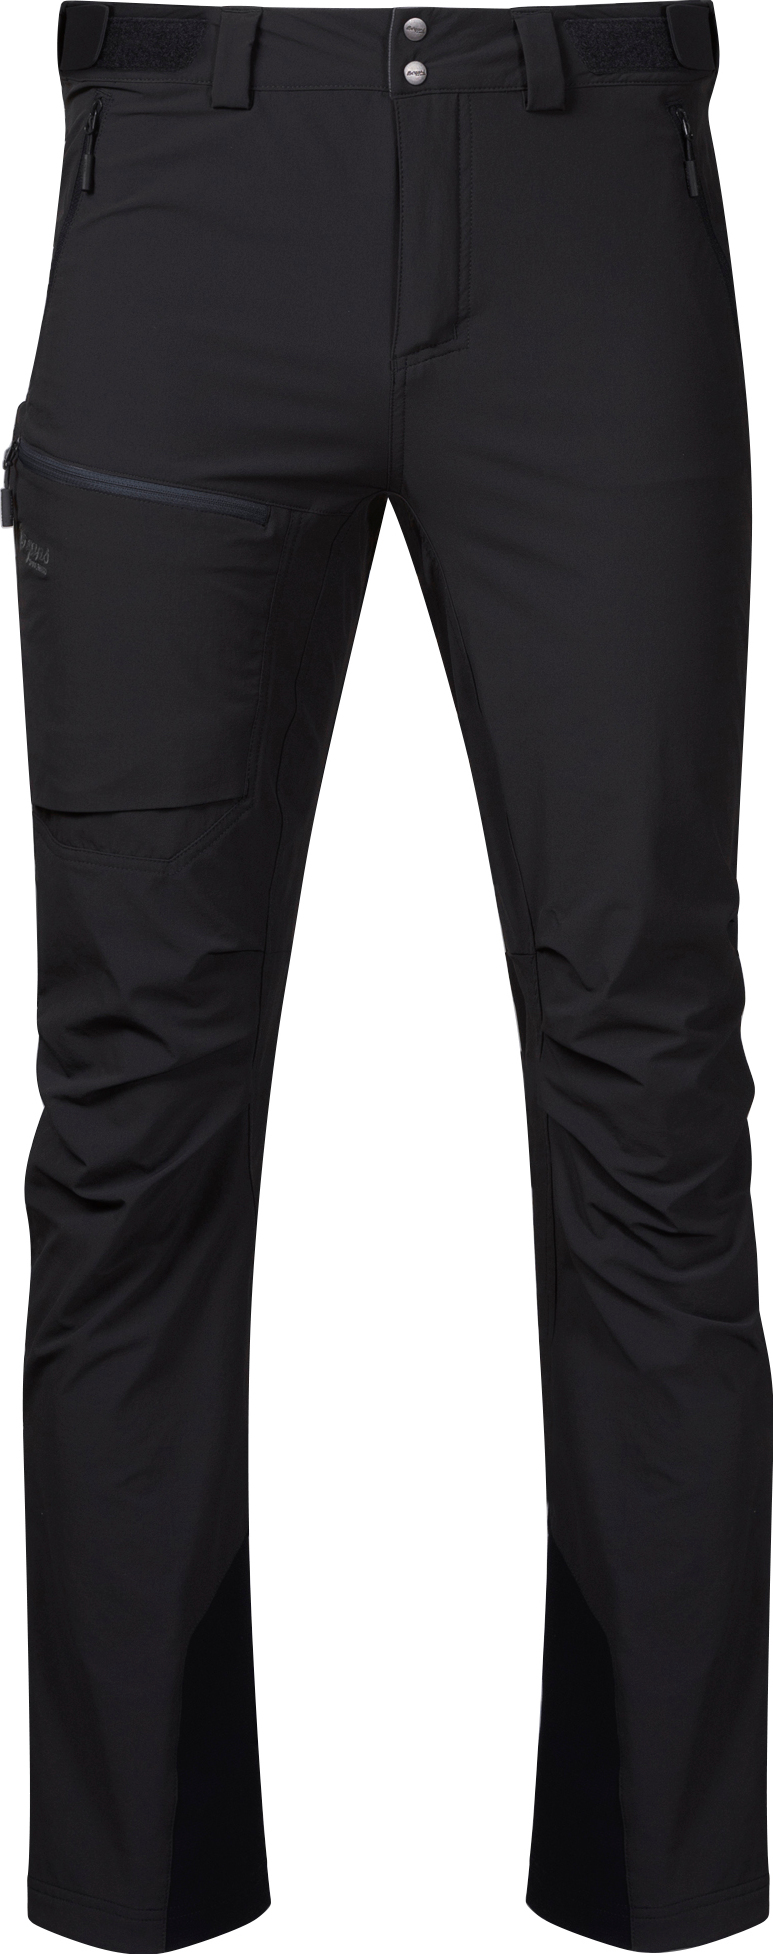 Bergans Men's Breheimen Softshell Pants Black/Solid Charcoal Short M, Black/Solid Charcoal